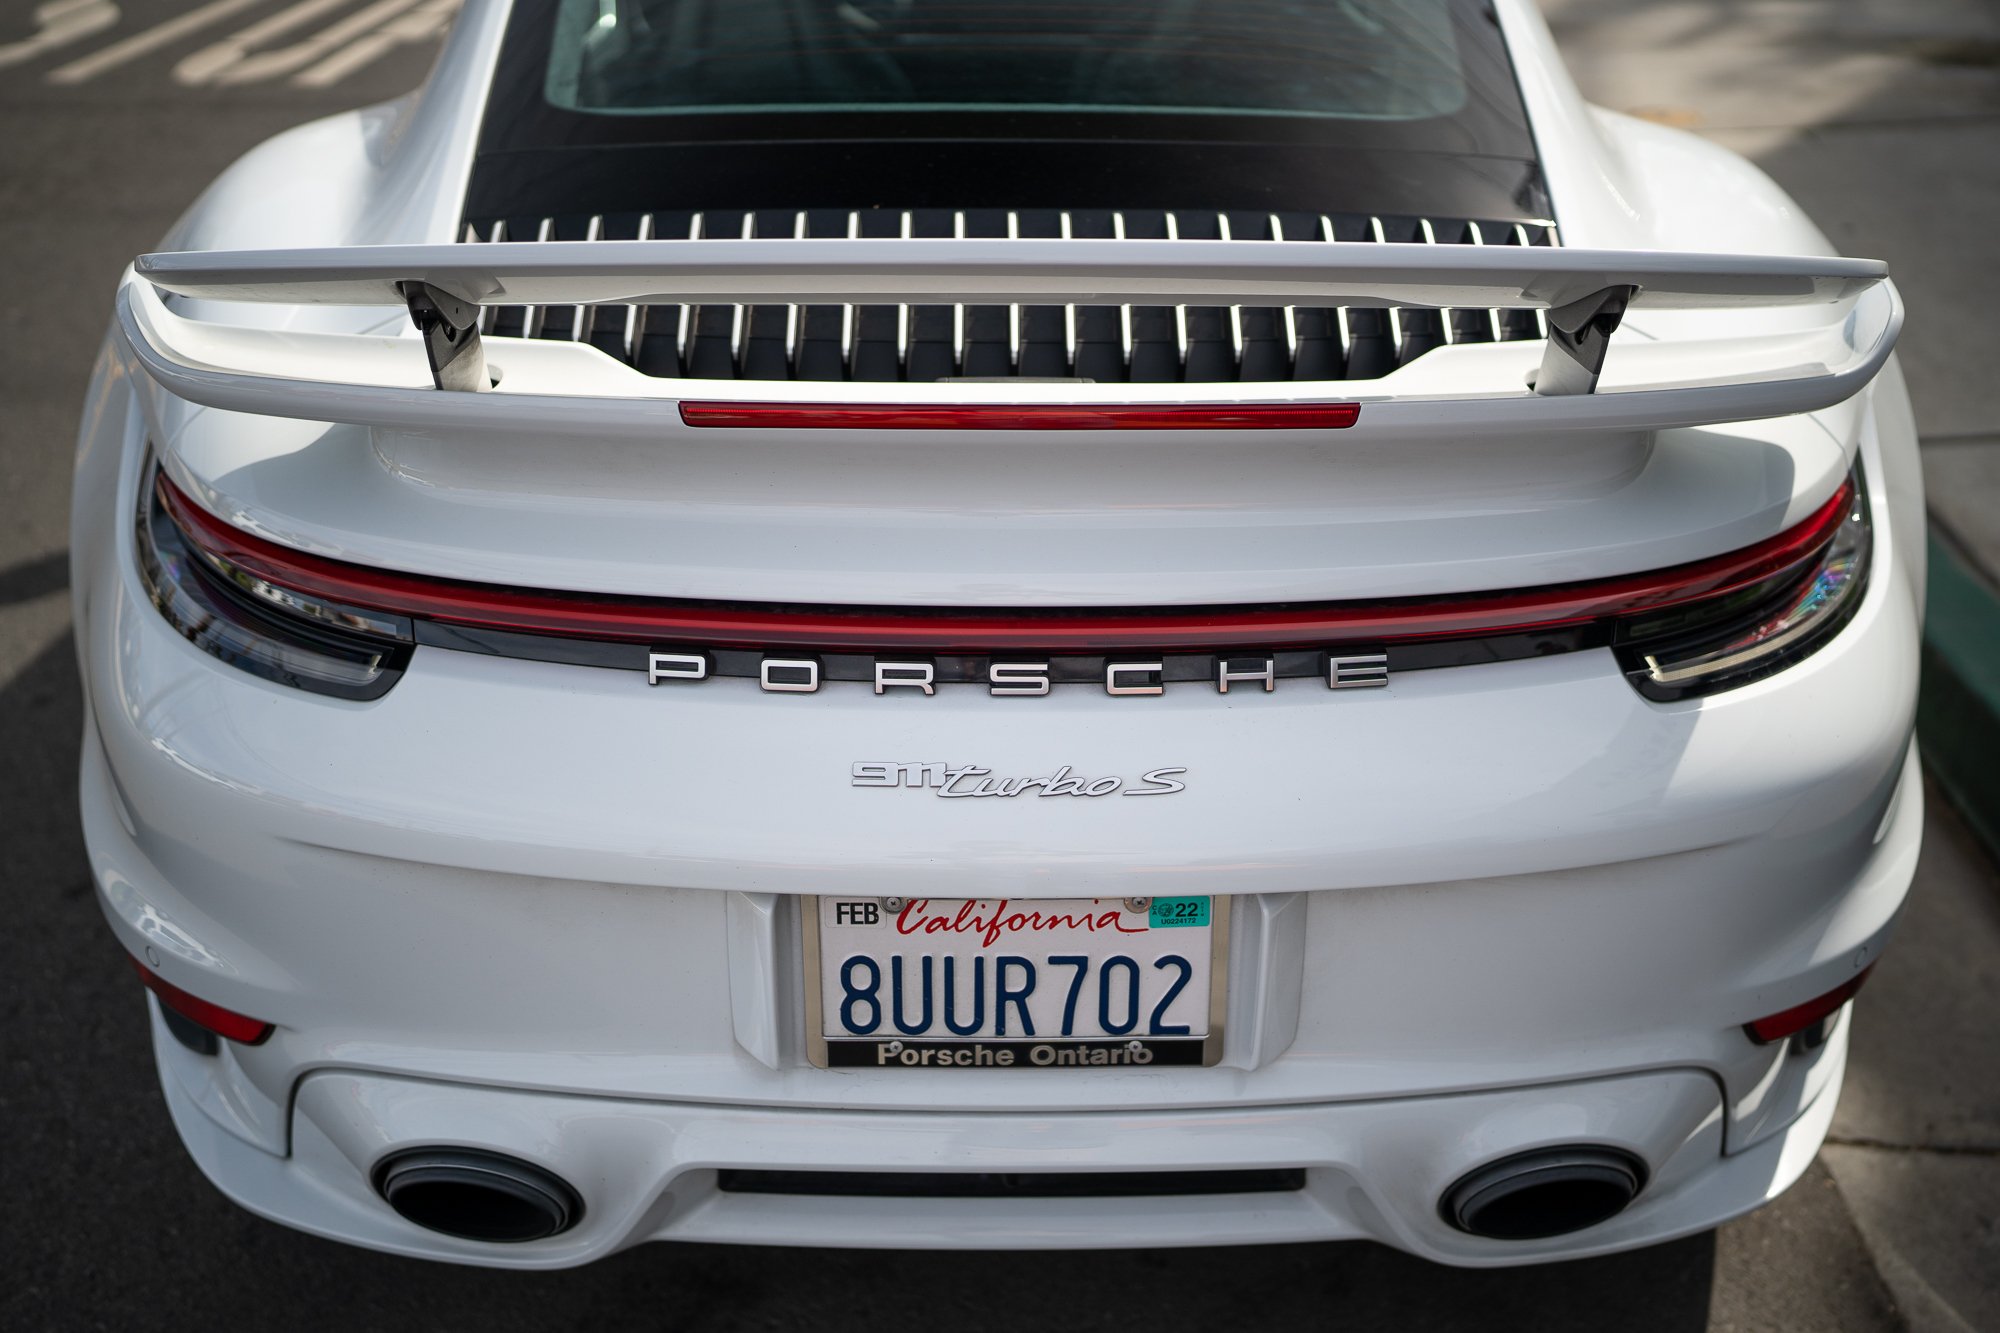 White 911 Turbo S outside Carparc USA